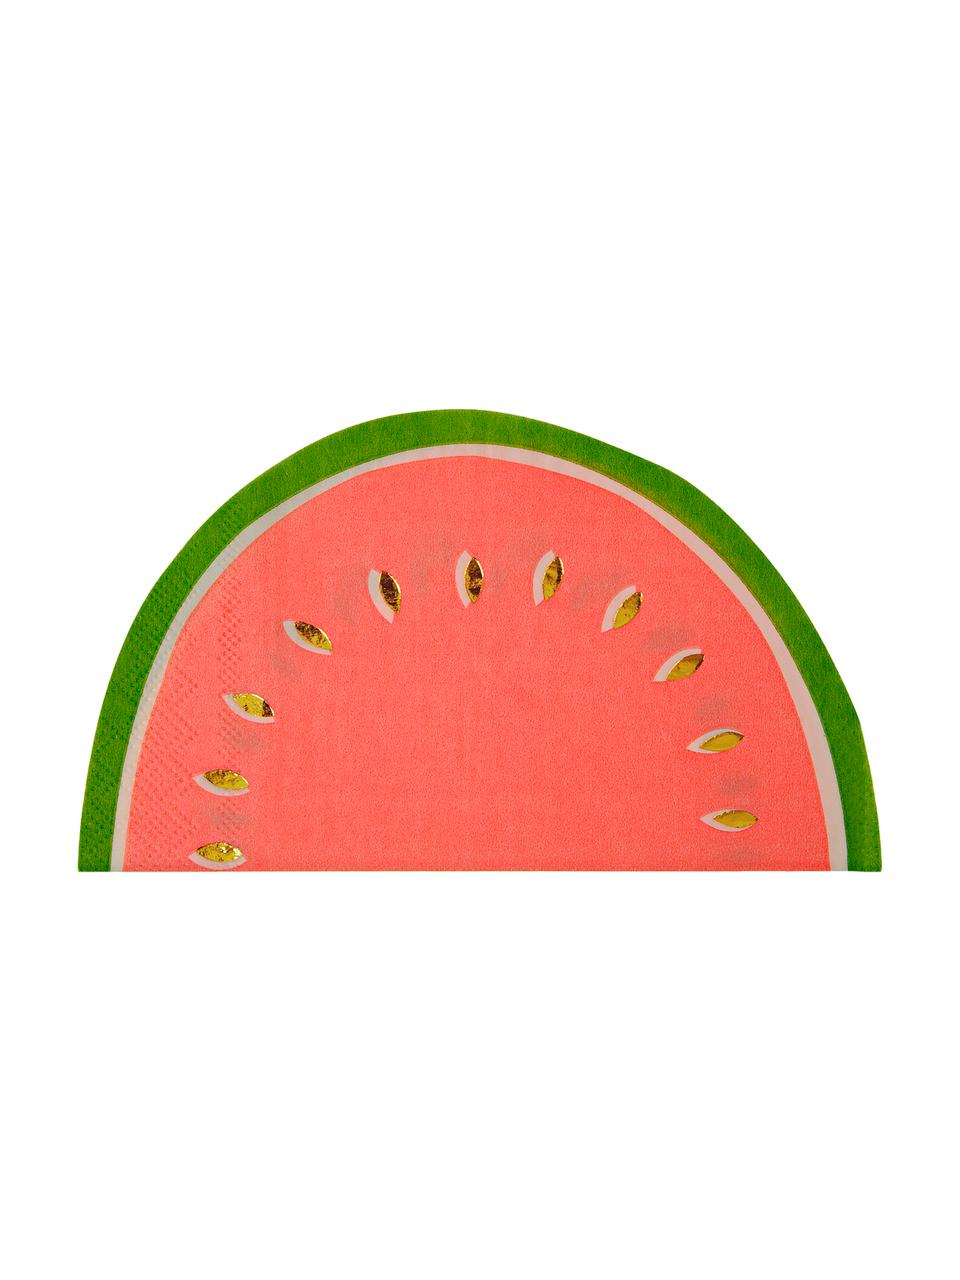 Papieren servetten Watermelon, 16 stuks, Papier, Rood, groen, goudkleurig, 20 x 17 cm